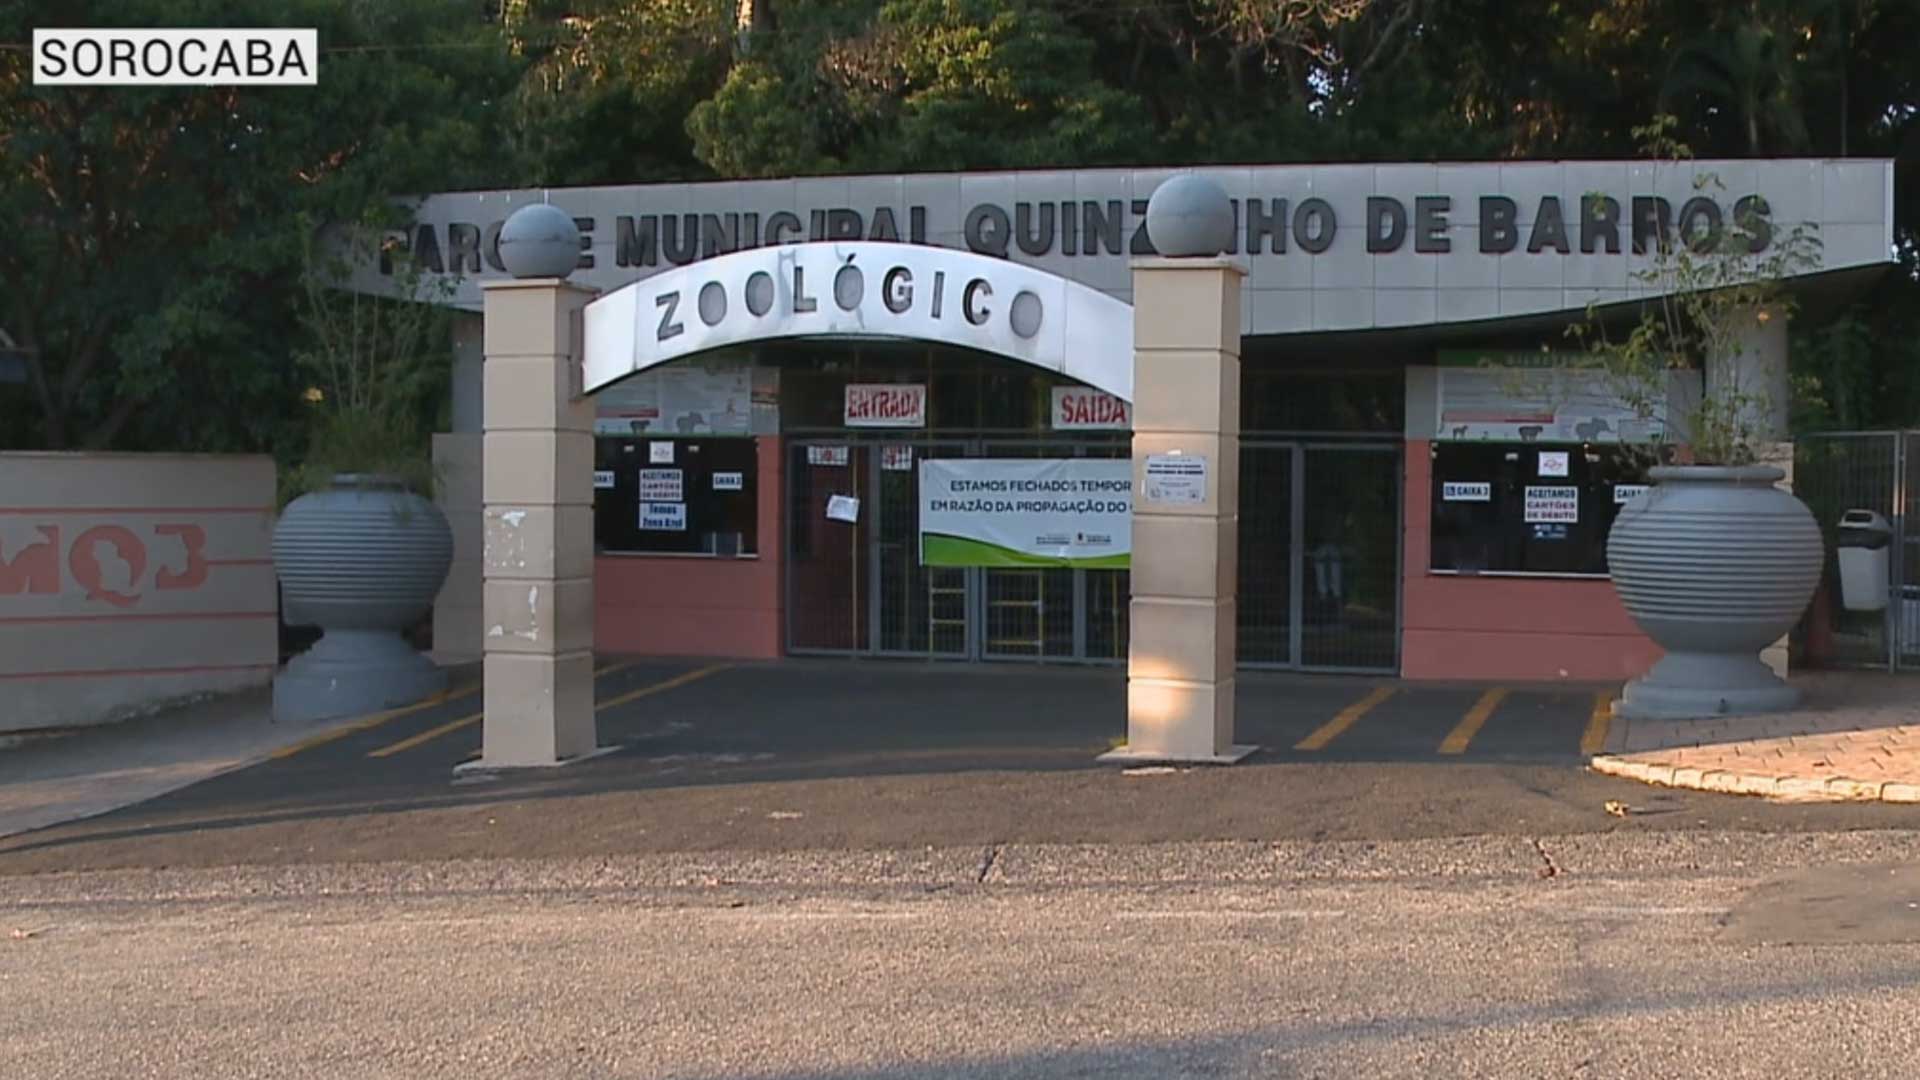 Zoológico de Sorocaba tem novos hábitos durante a pandemia.